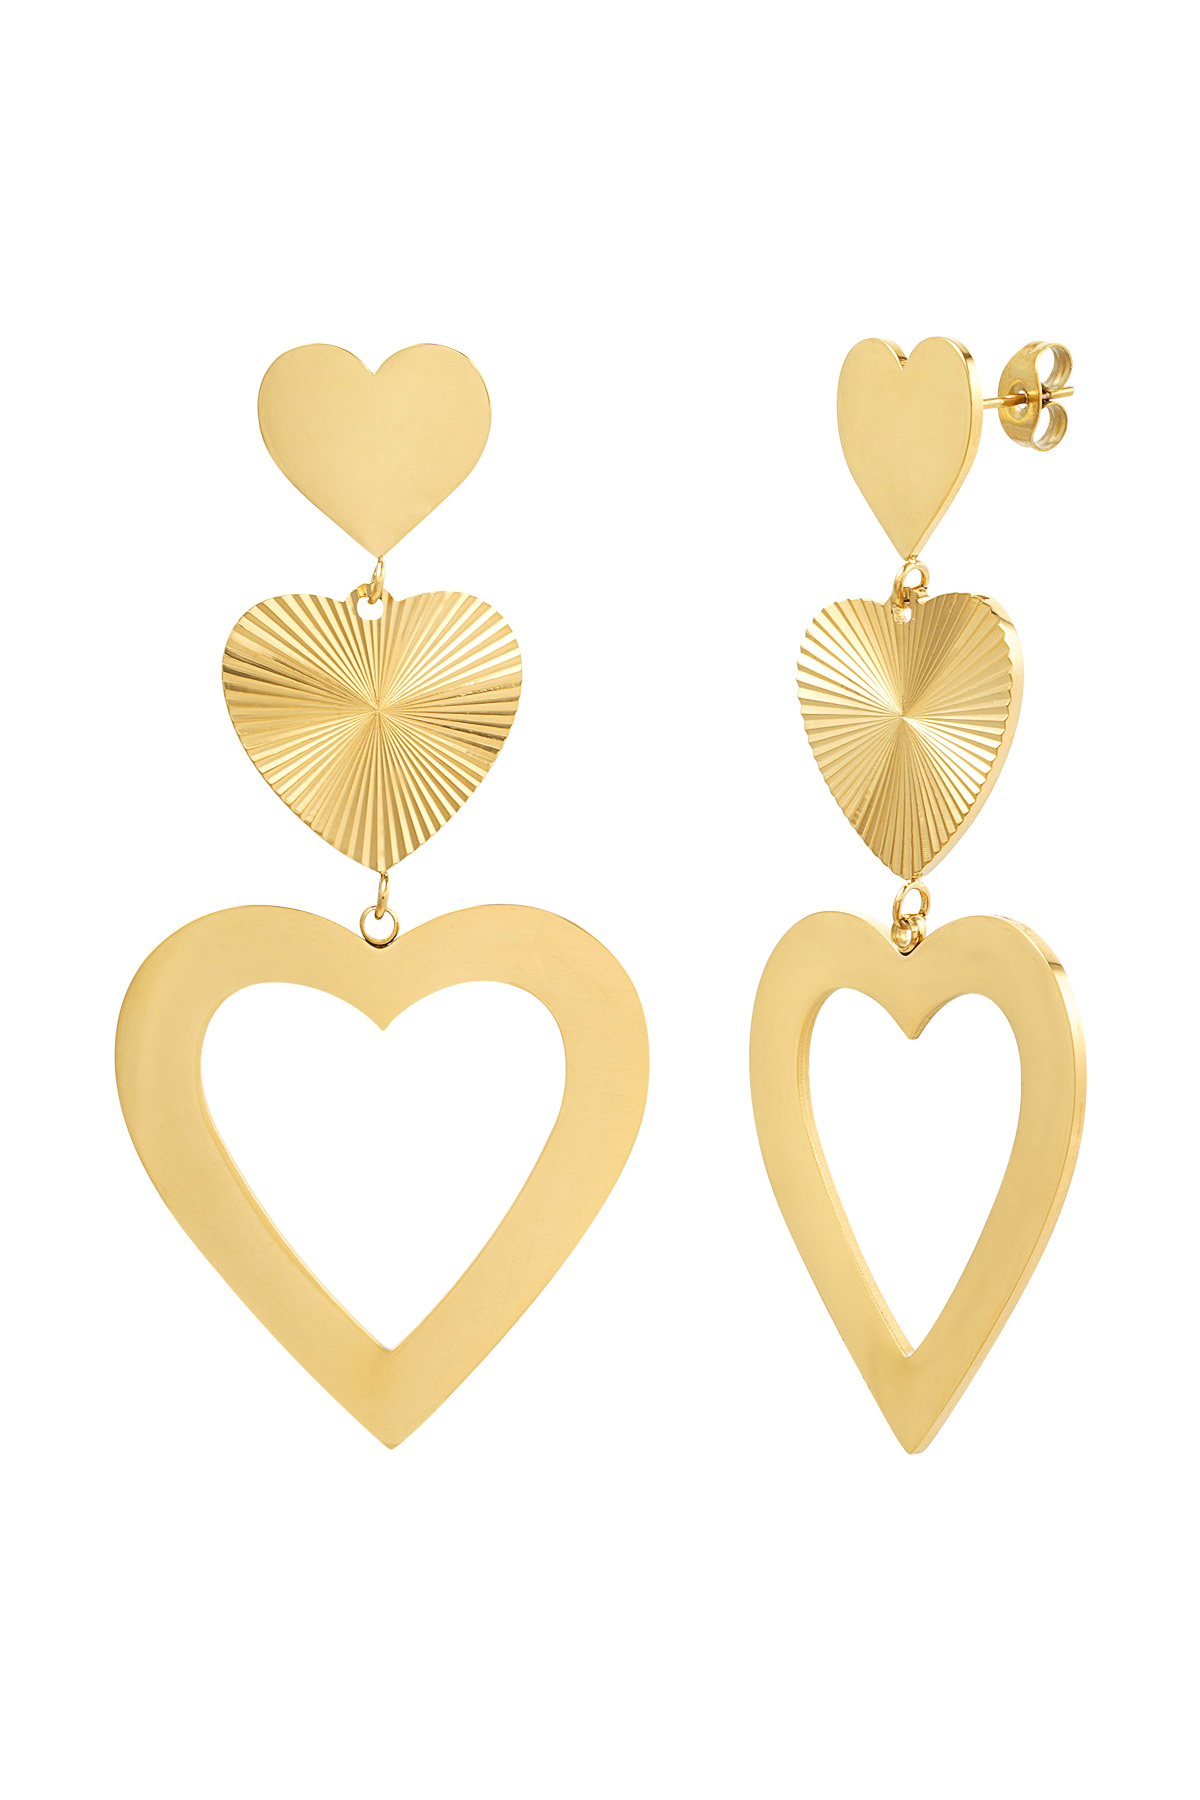 Earrings three hearts - gold h5 